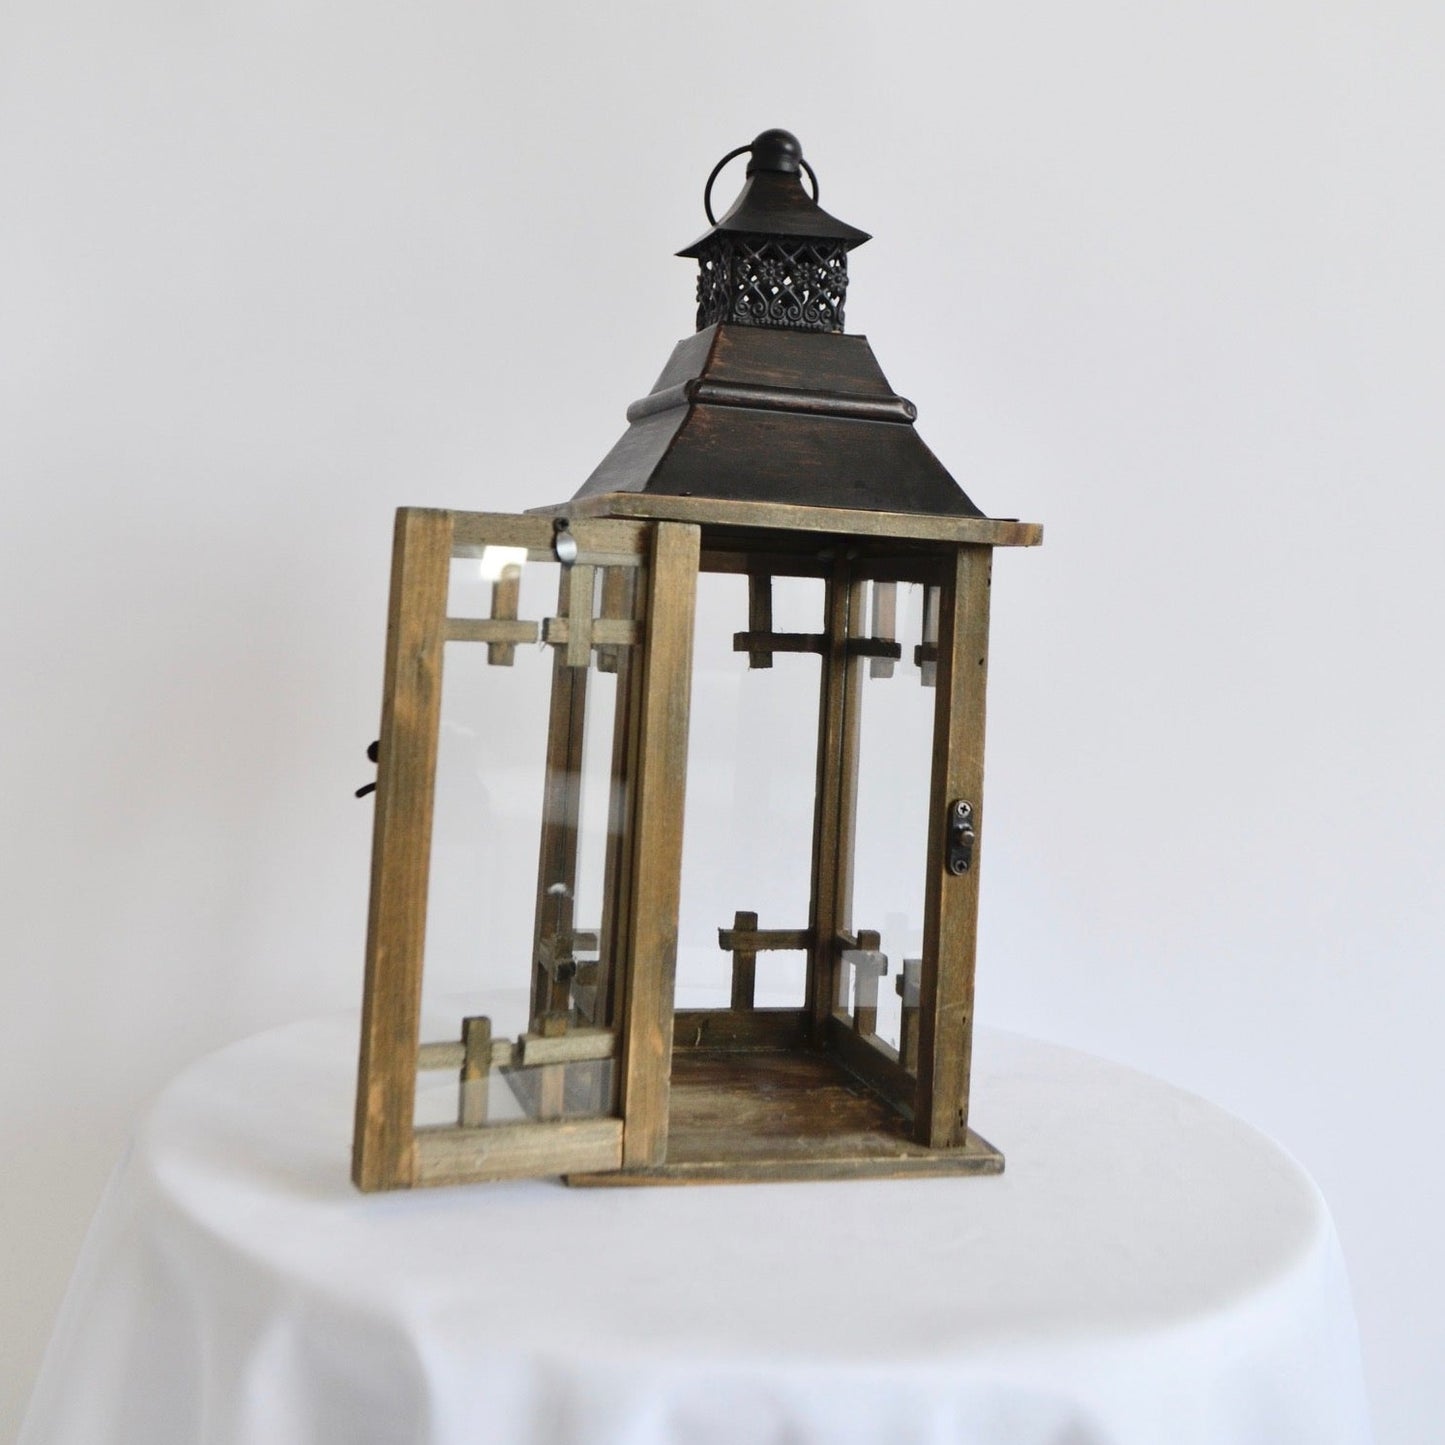 Bronze and wood lantern